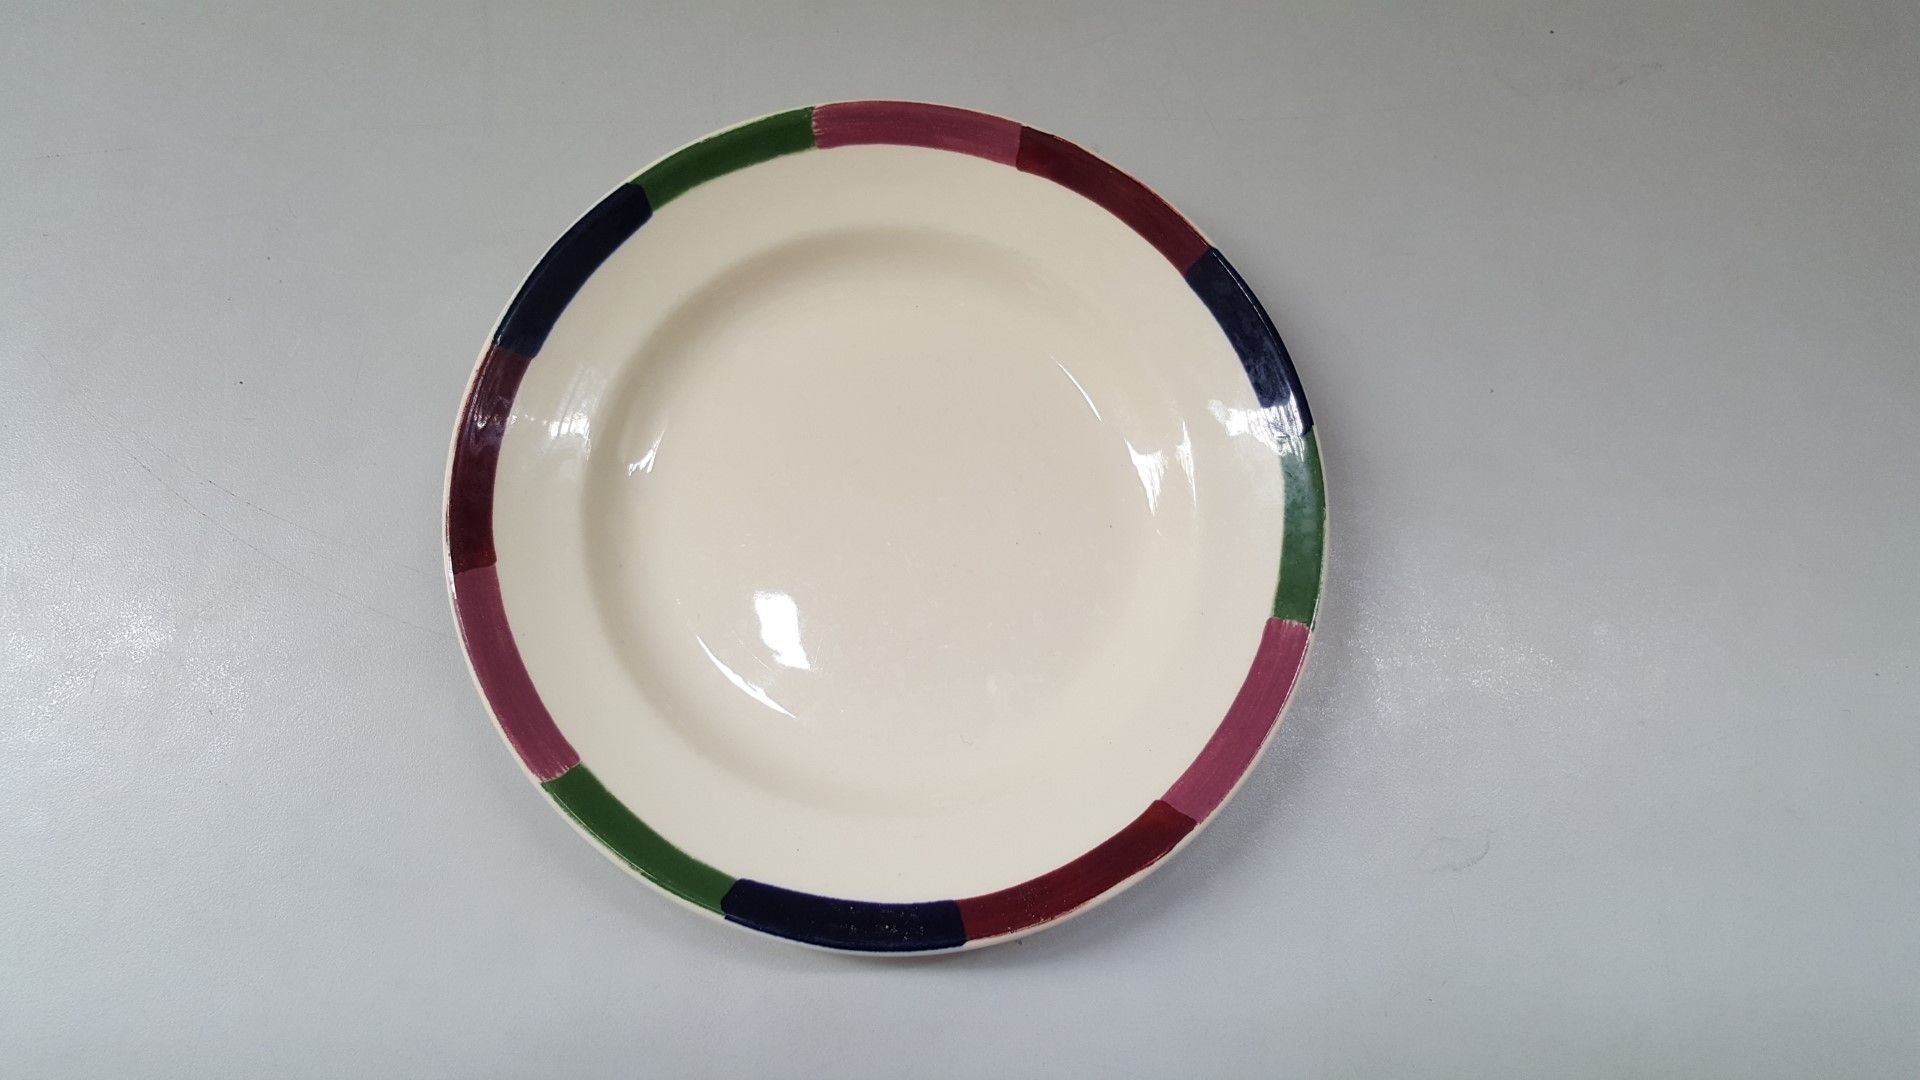 15 x Steelite Harmony Plates Cream With Pattered Egde 20.5CM - Ref CQ289 - Image 2 of 4